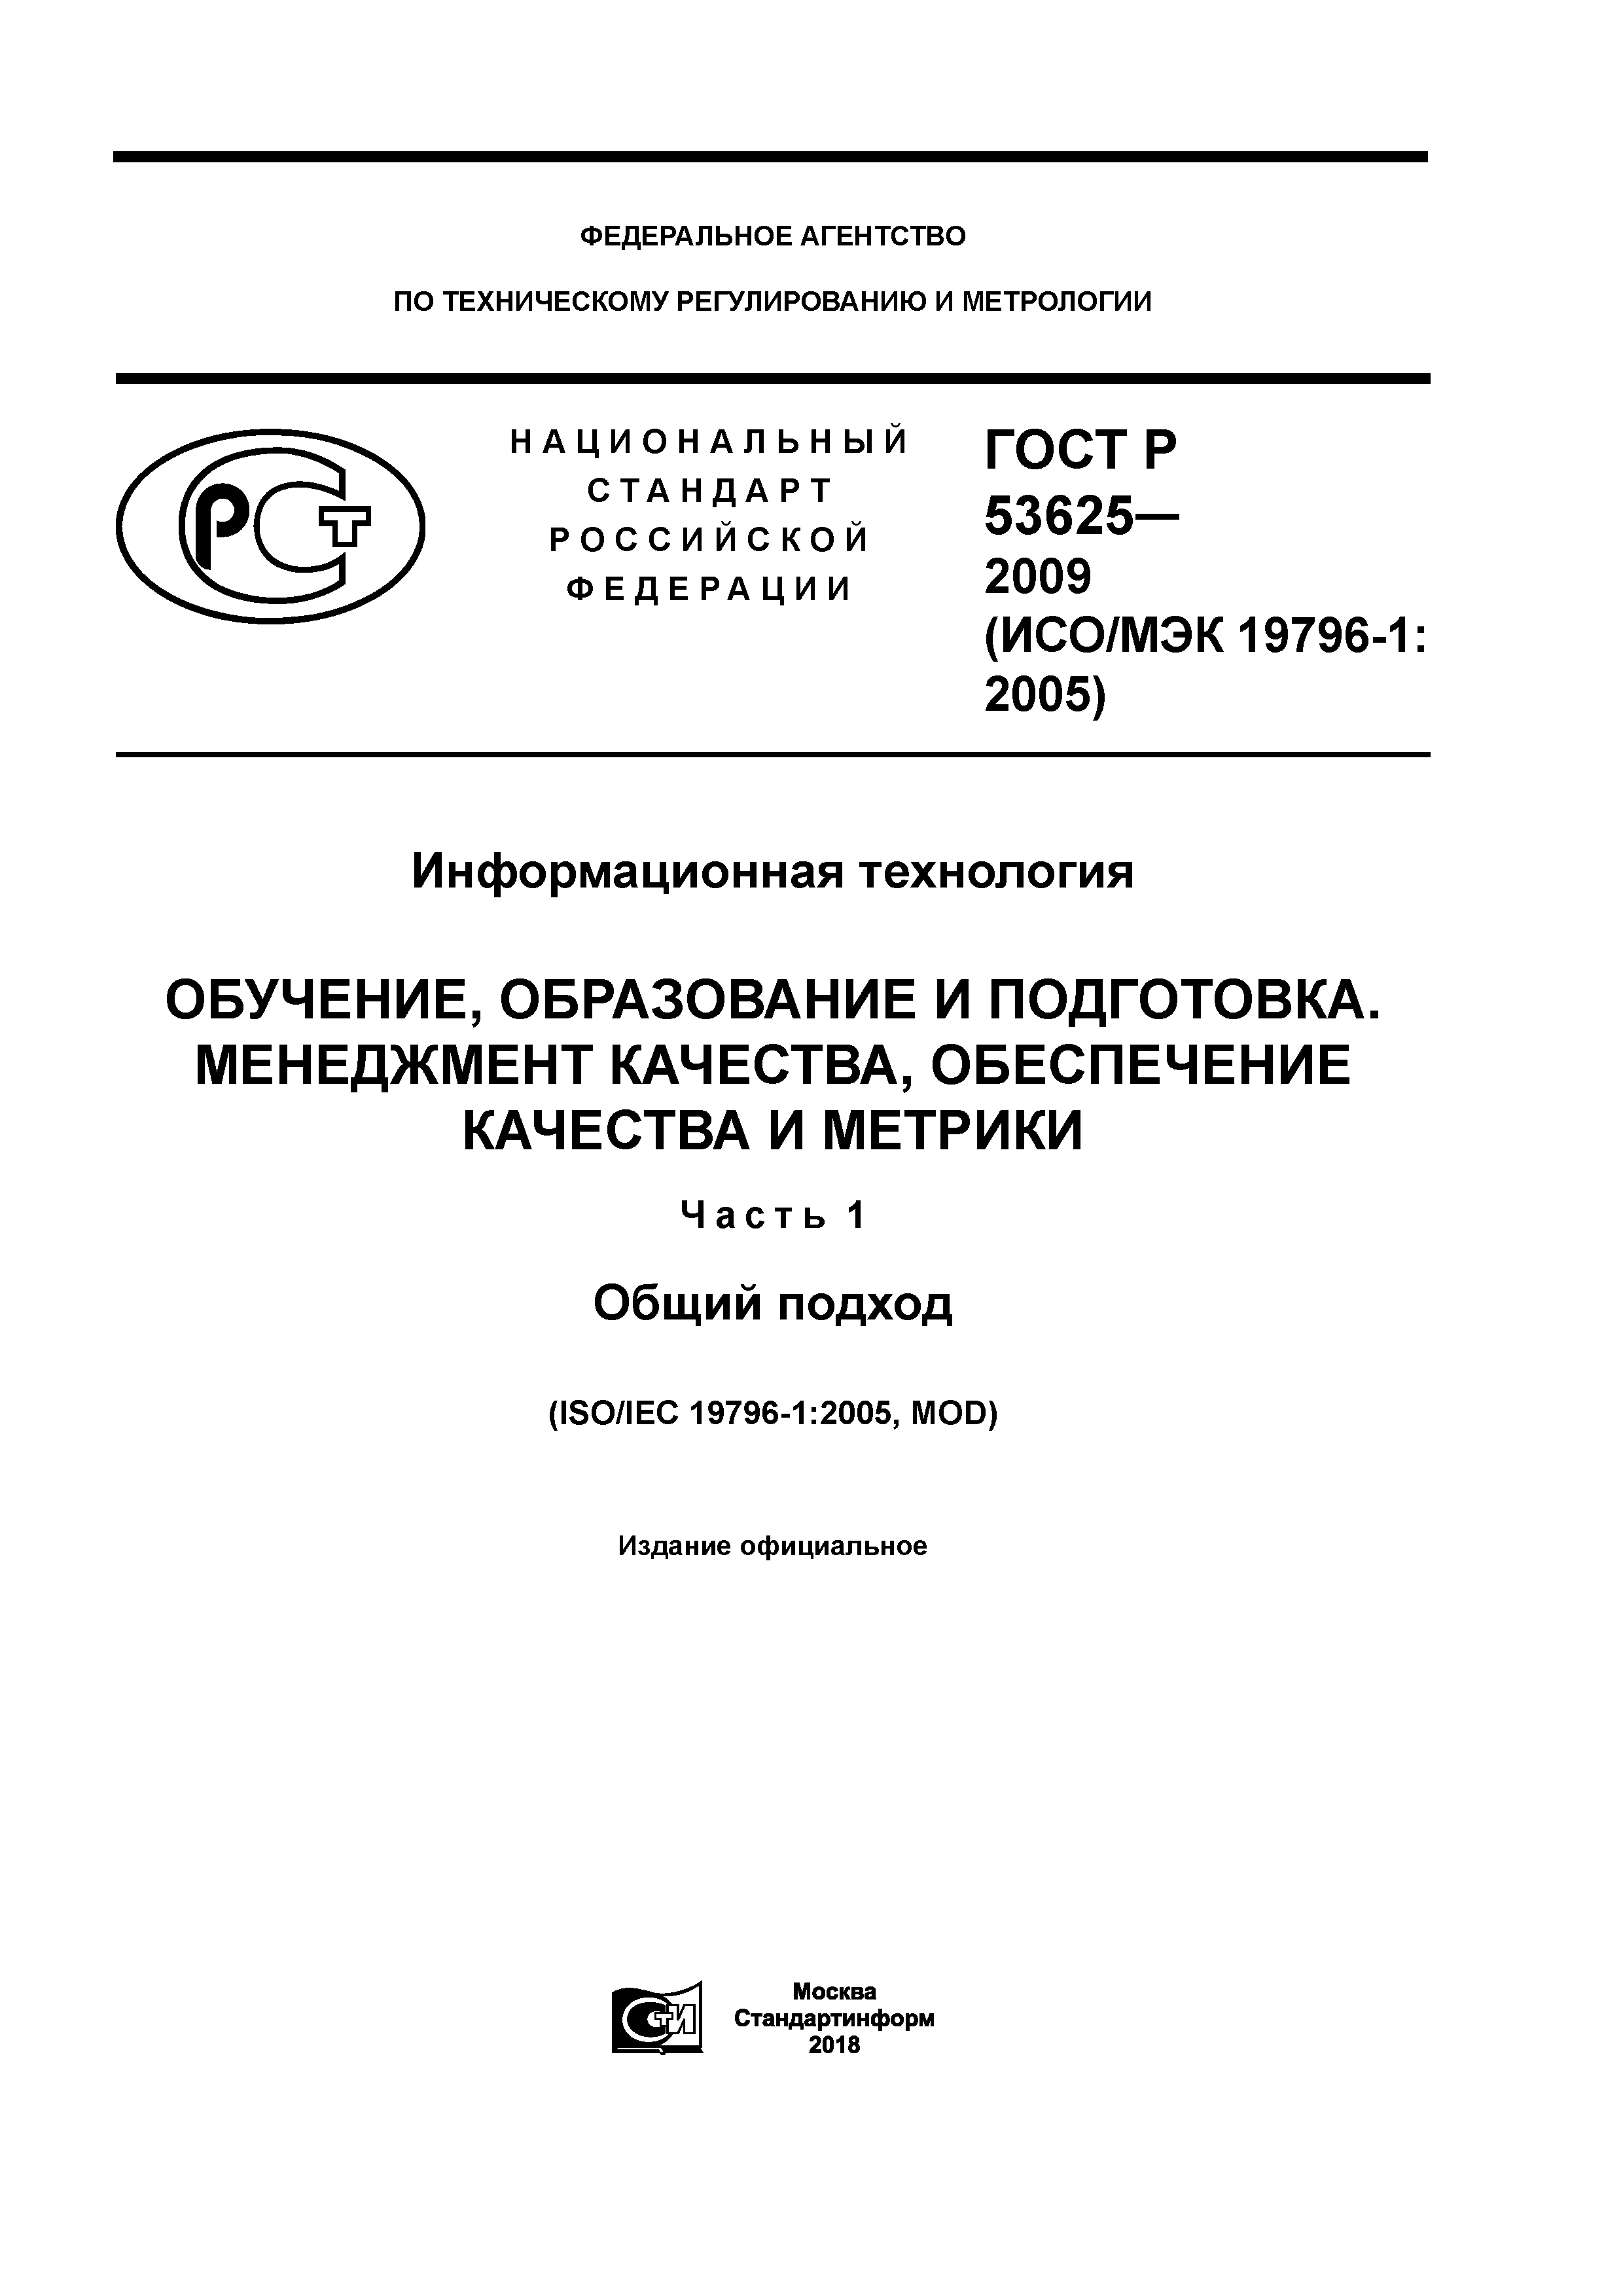 ГОСТ Р 53625-2009